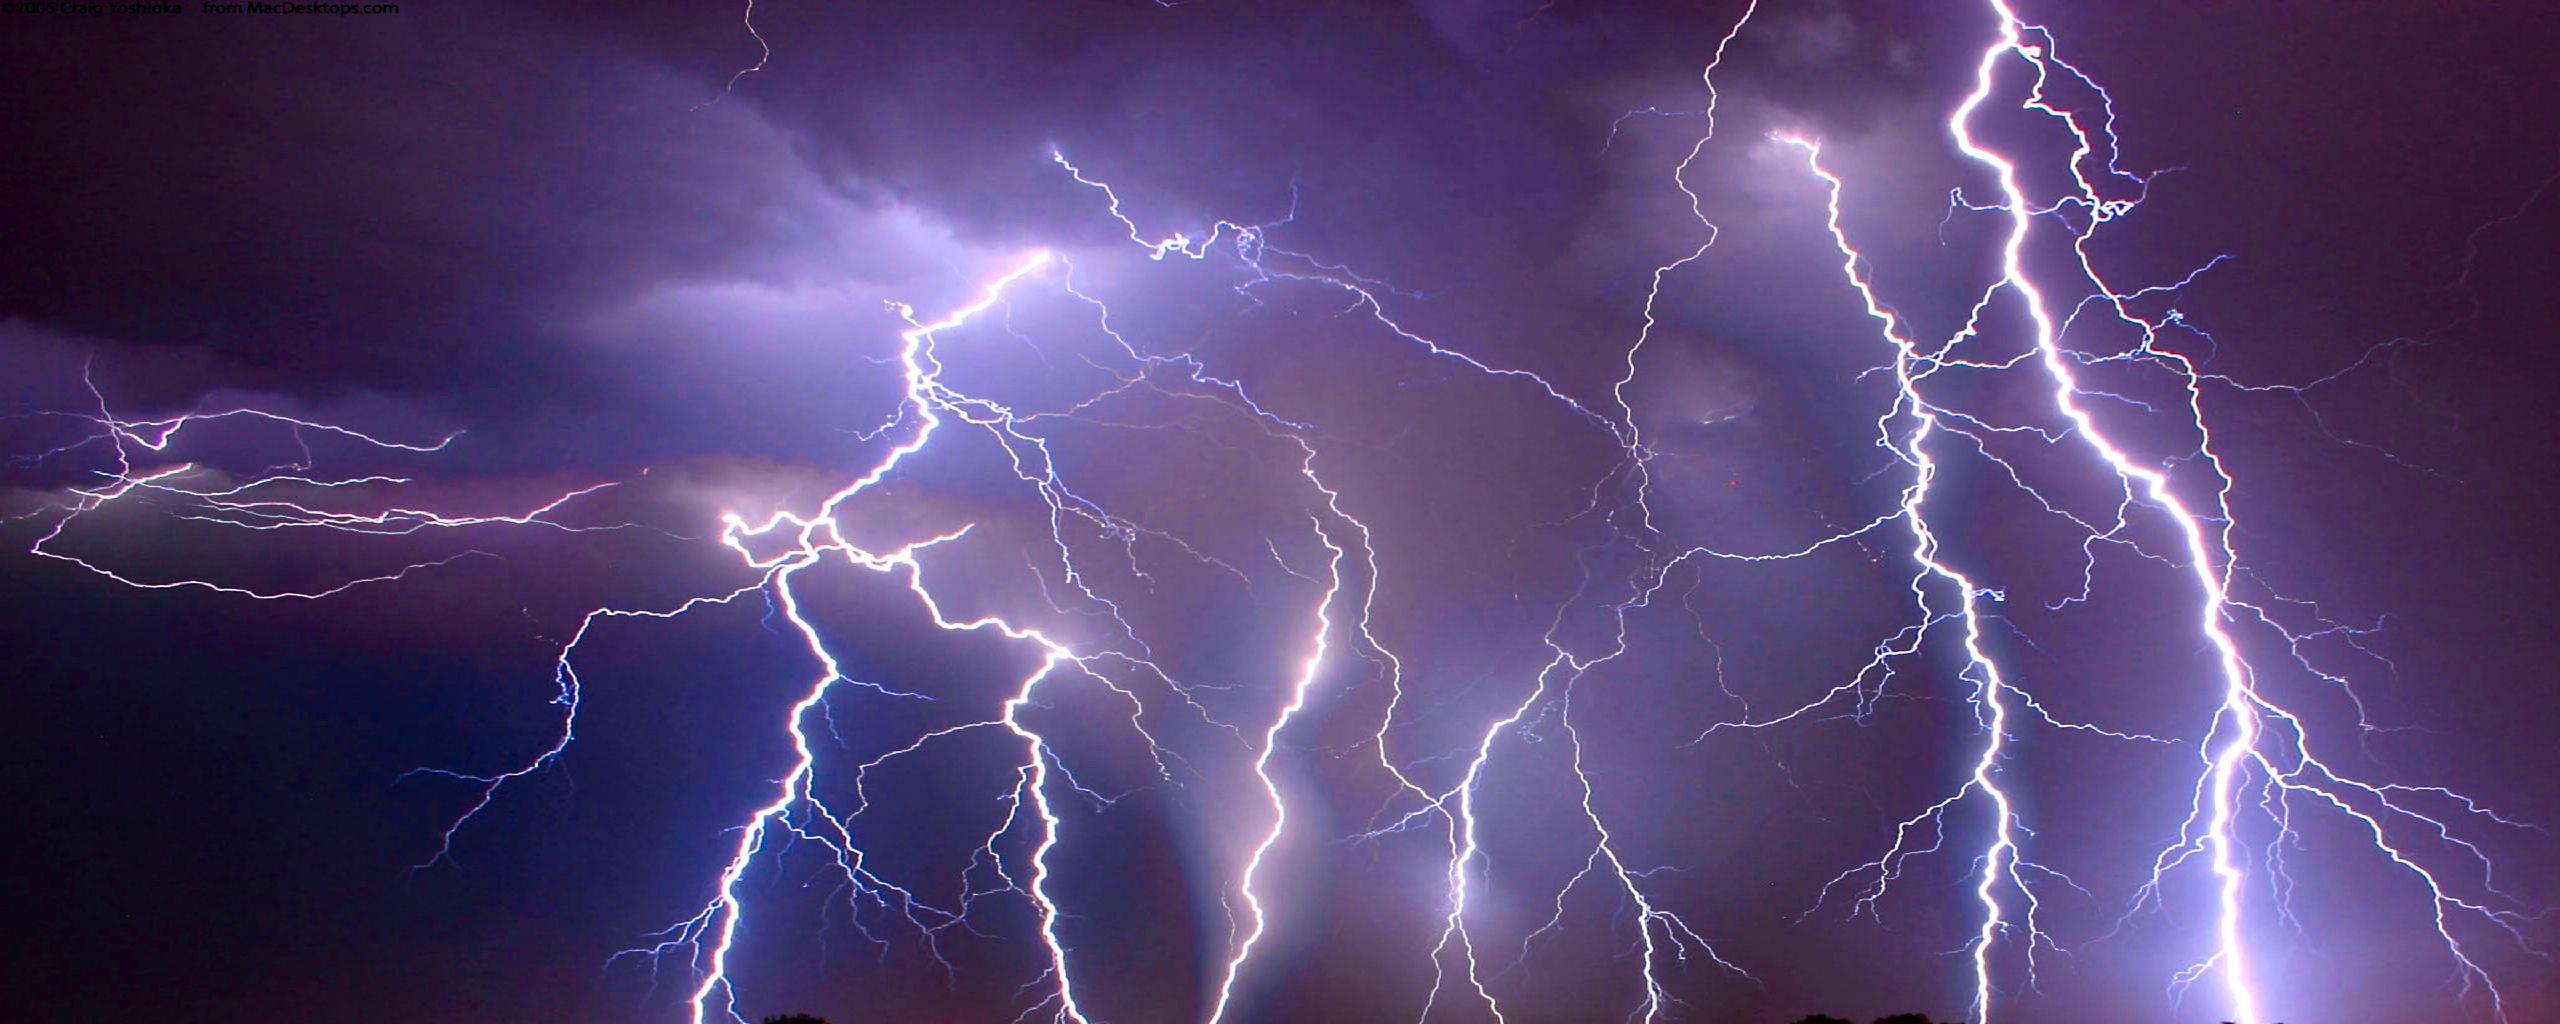 Pics Photos Storm Background Lightning Wallpaper